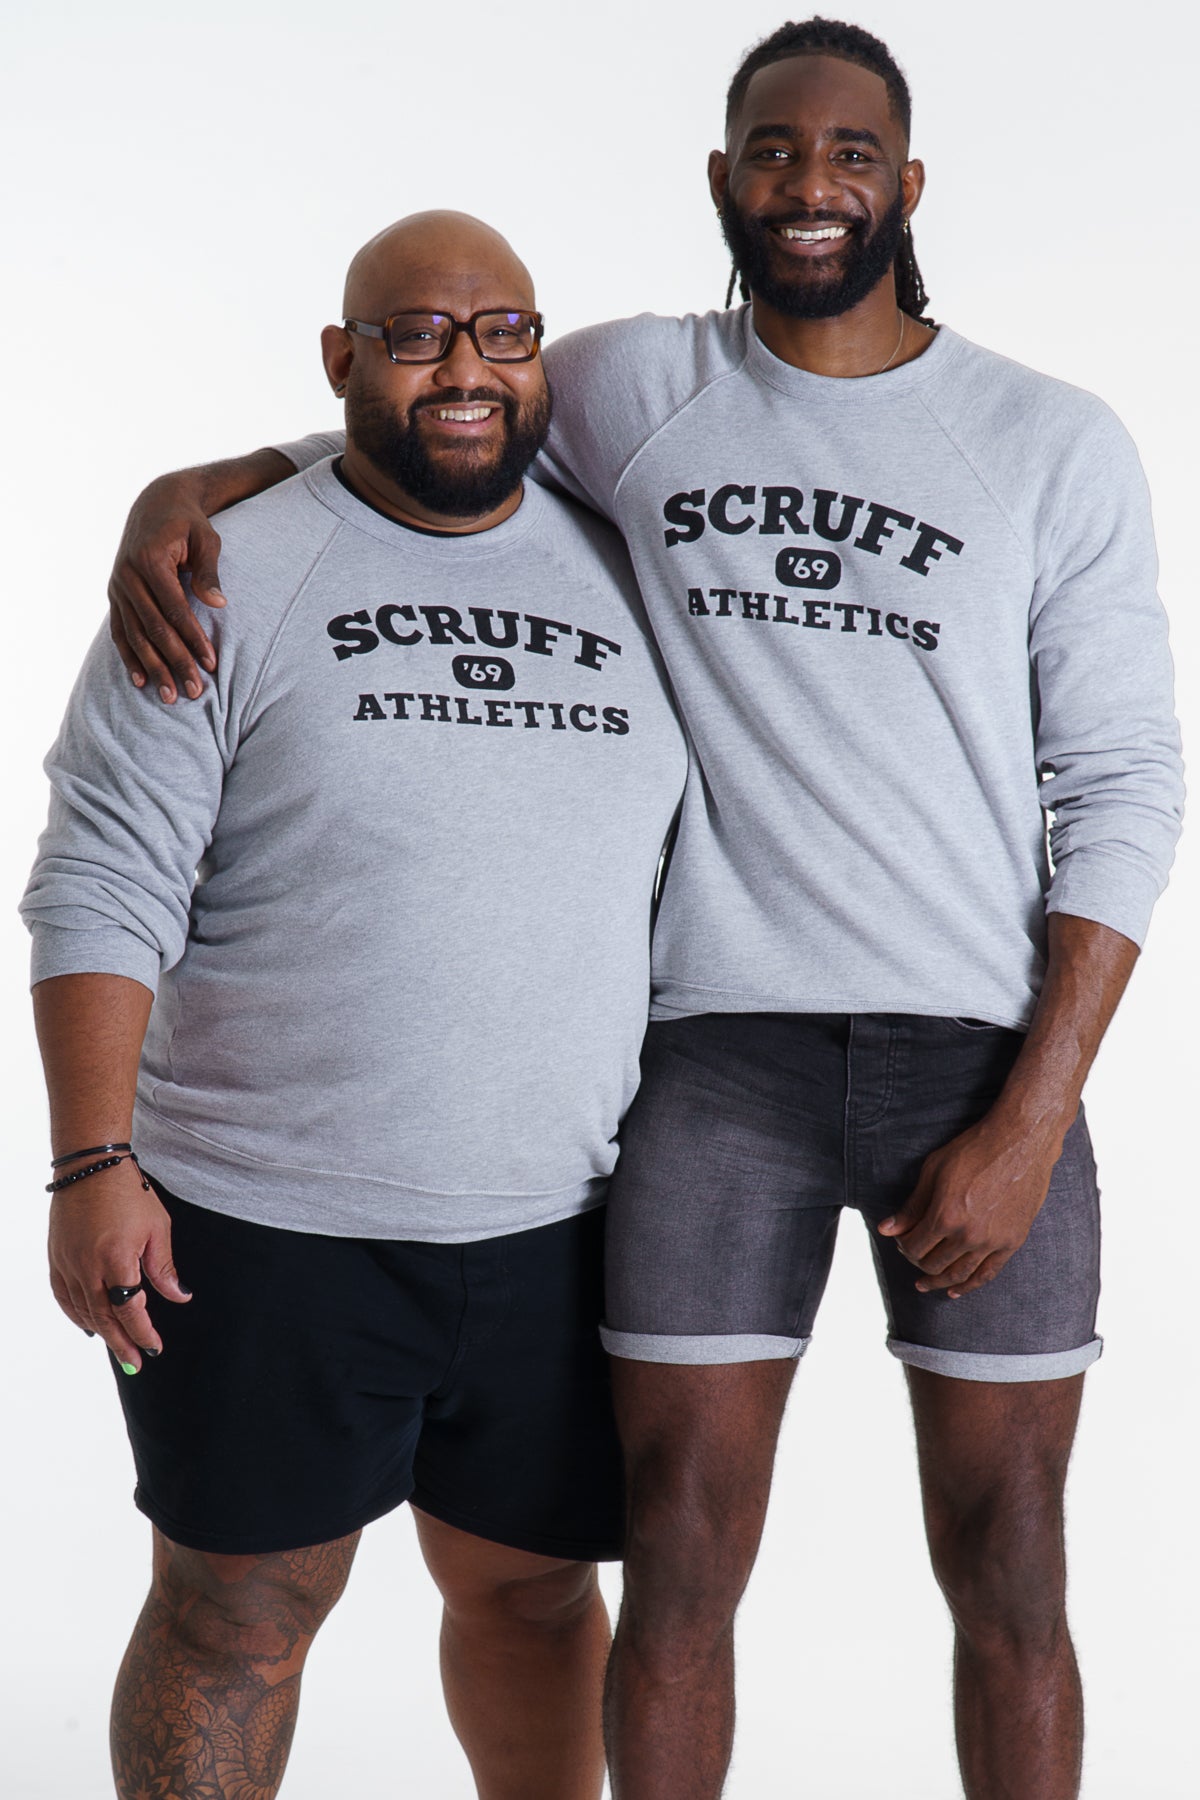 SCRUFF Athletics Sweater